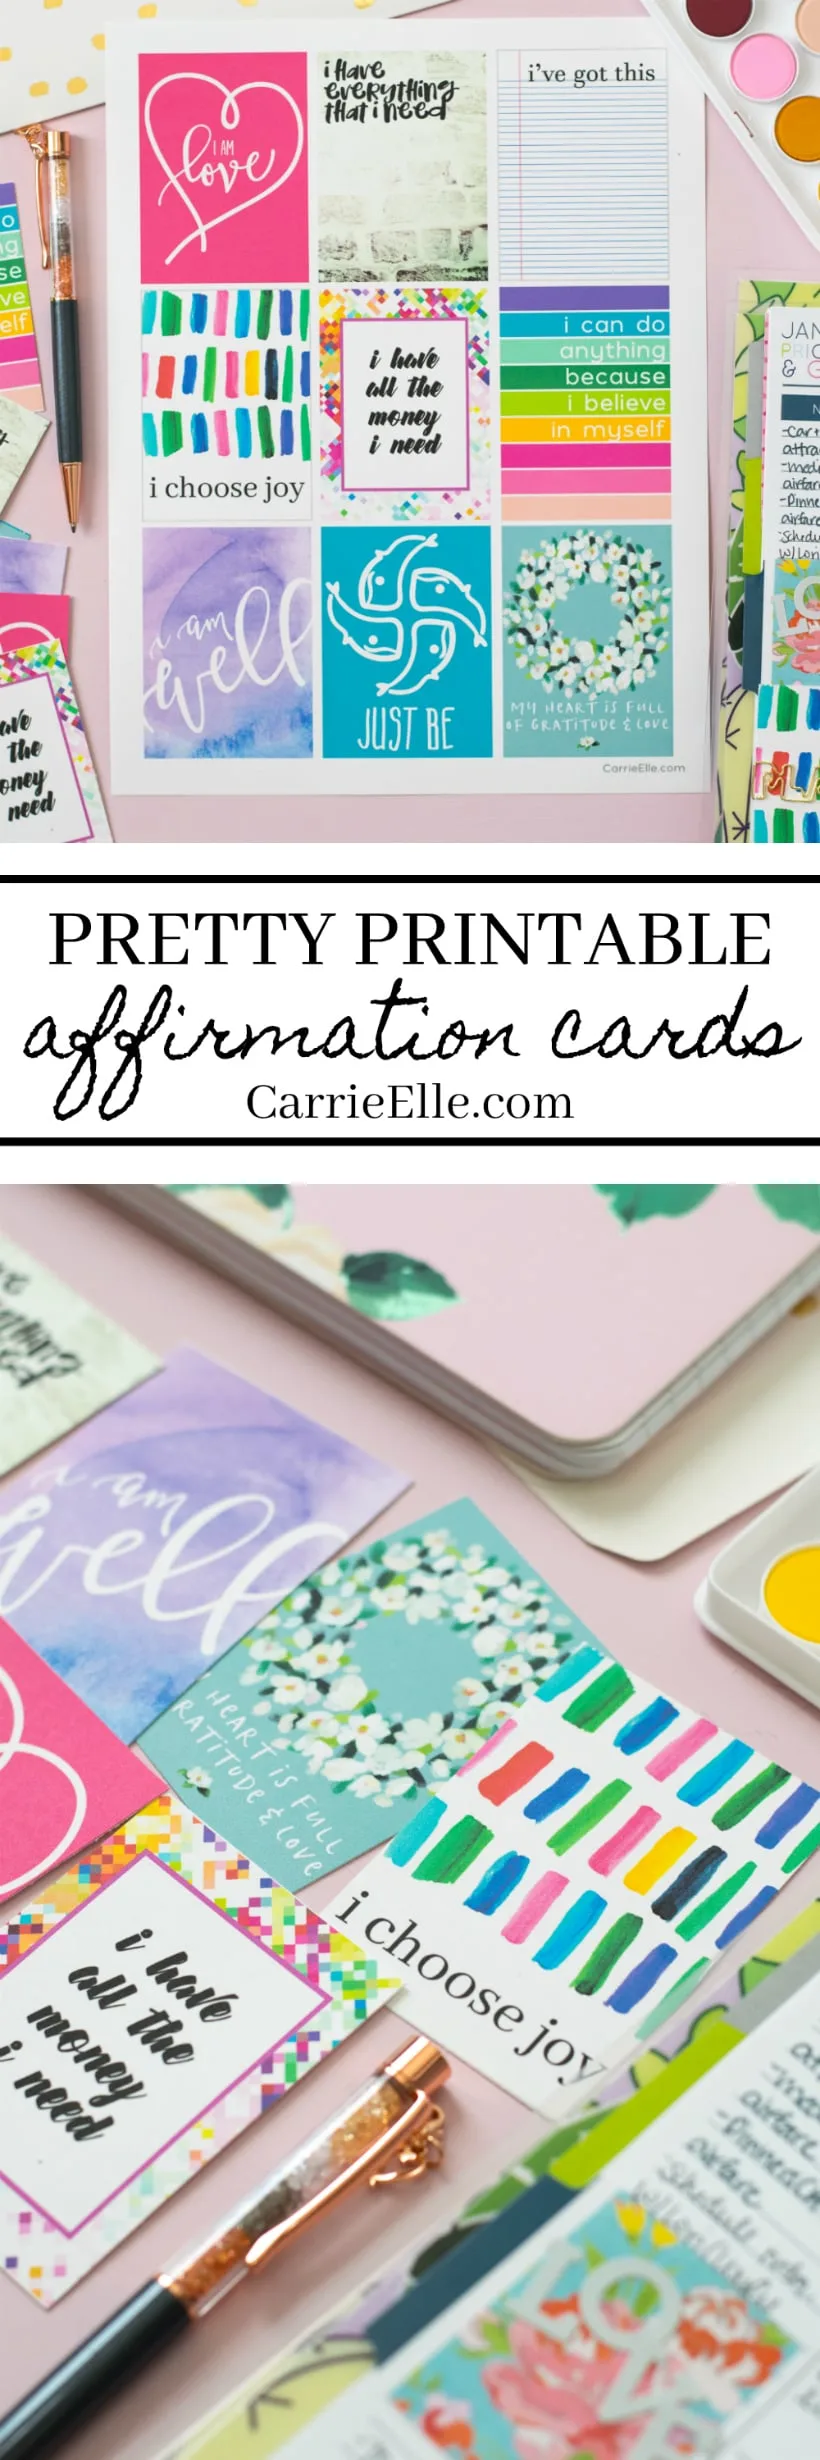 Printable Affirmation Cards